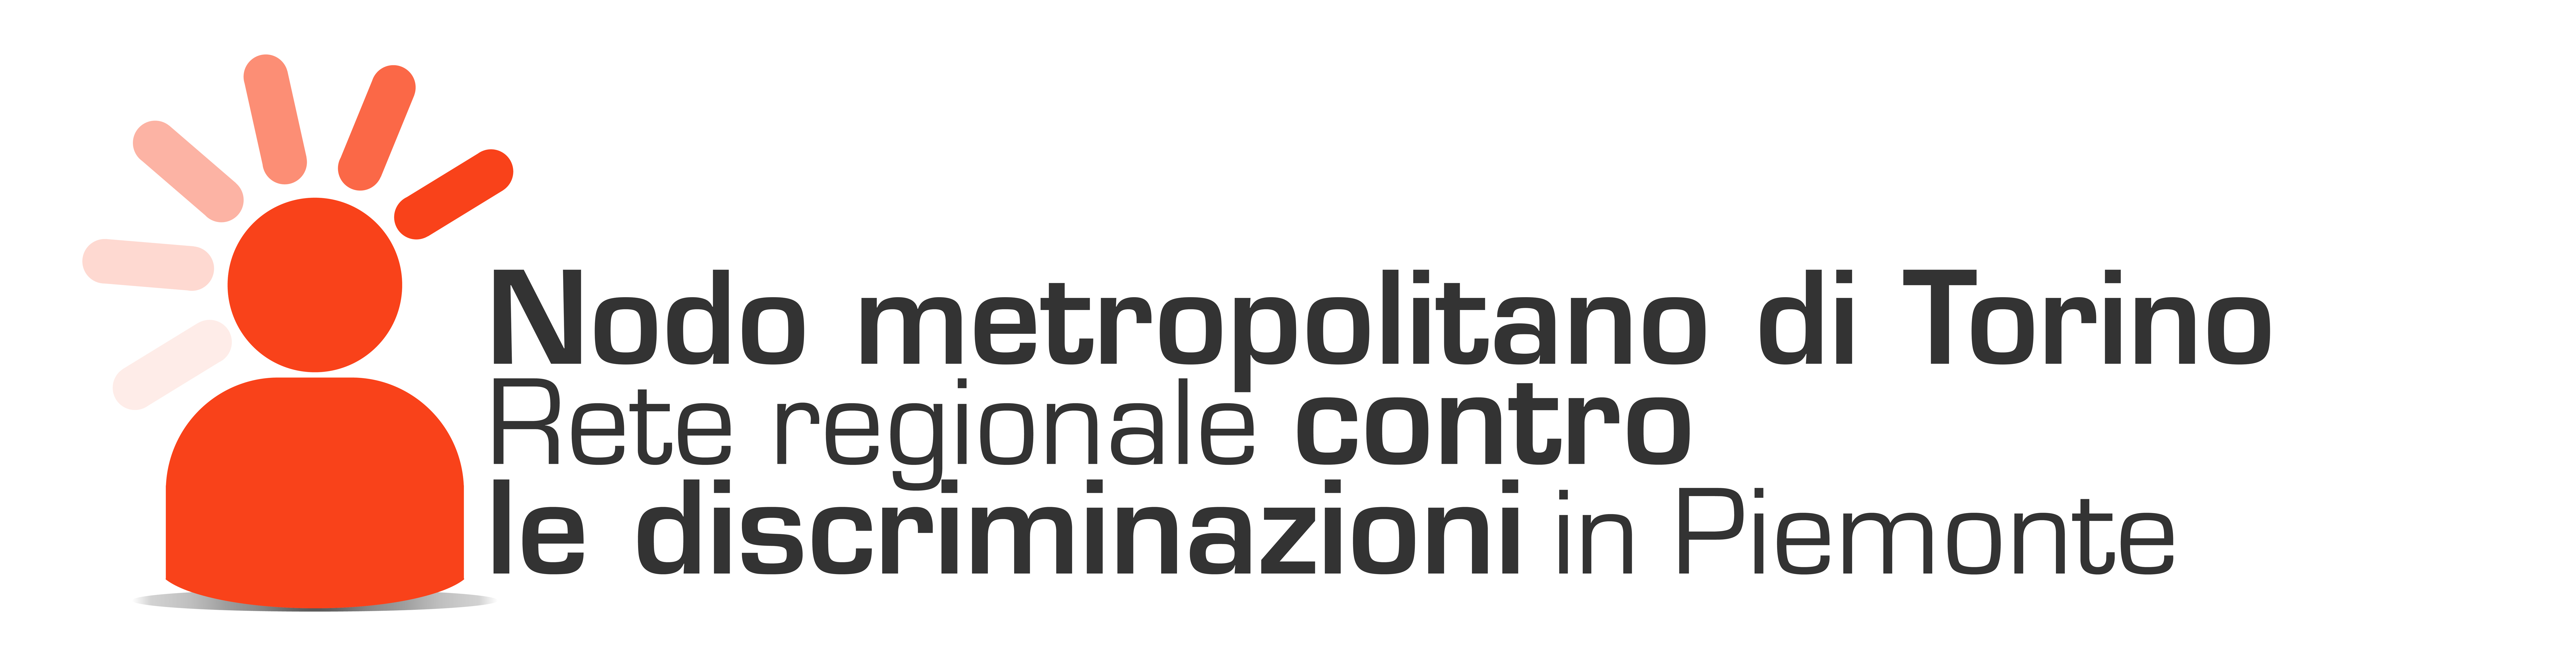 Logo discriminazioni nodo metropolitano di Torino